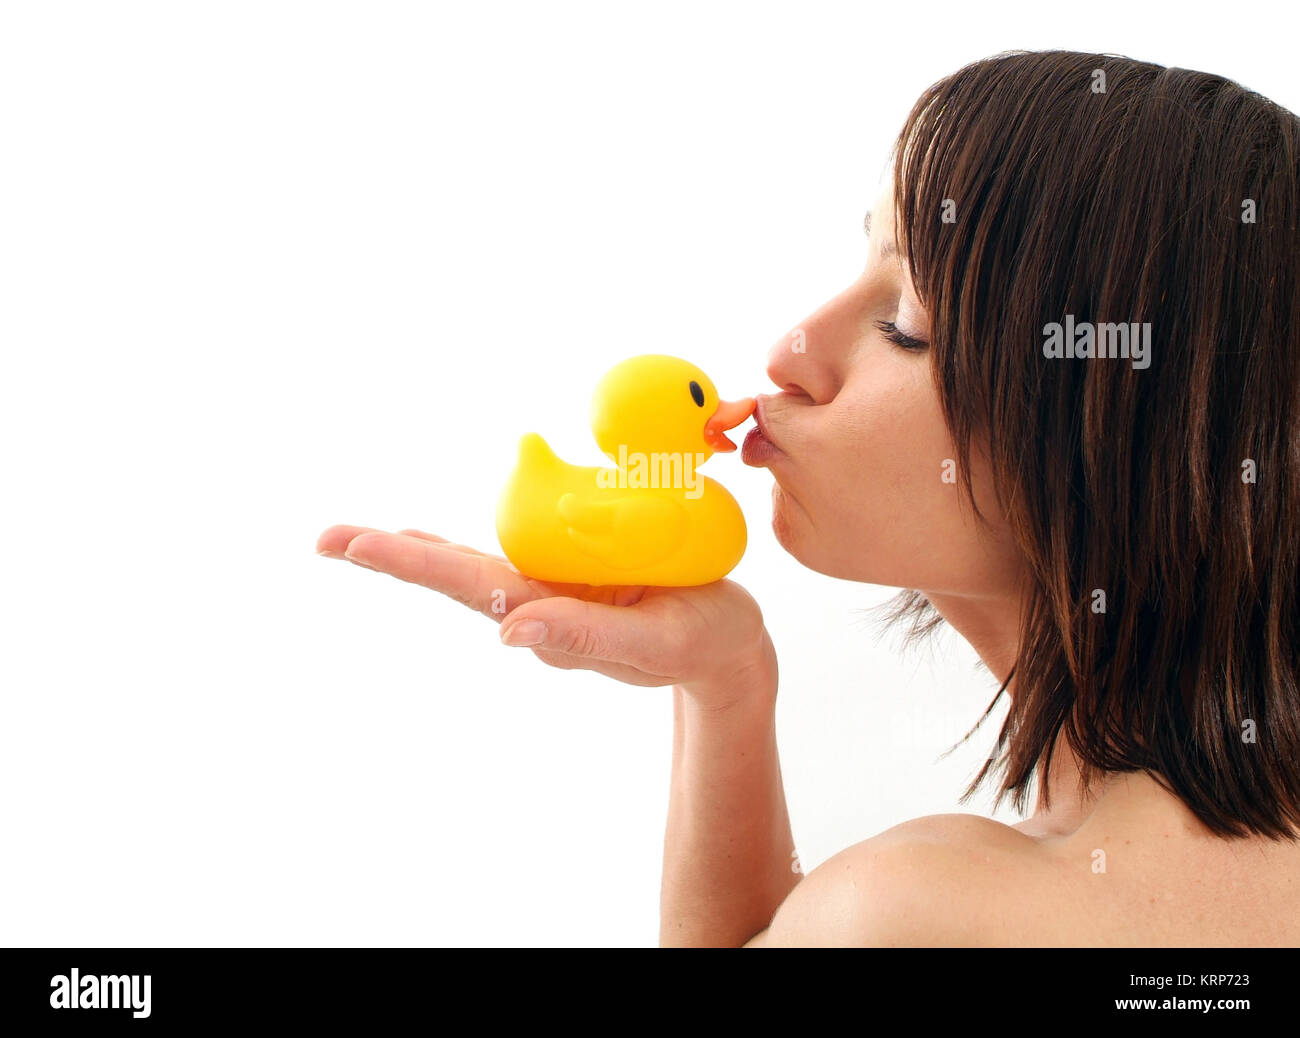 Junge Frau kuesst Badeente - young woman kissing rubber duck Stock Photo